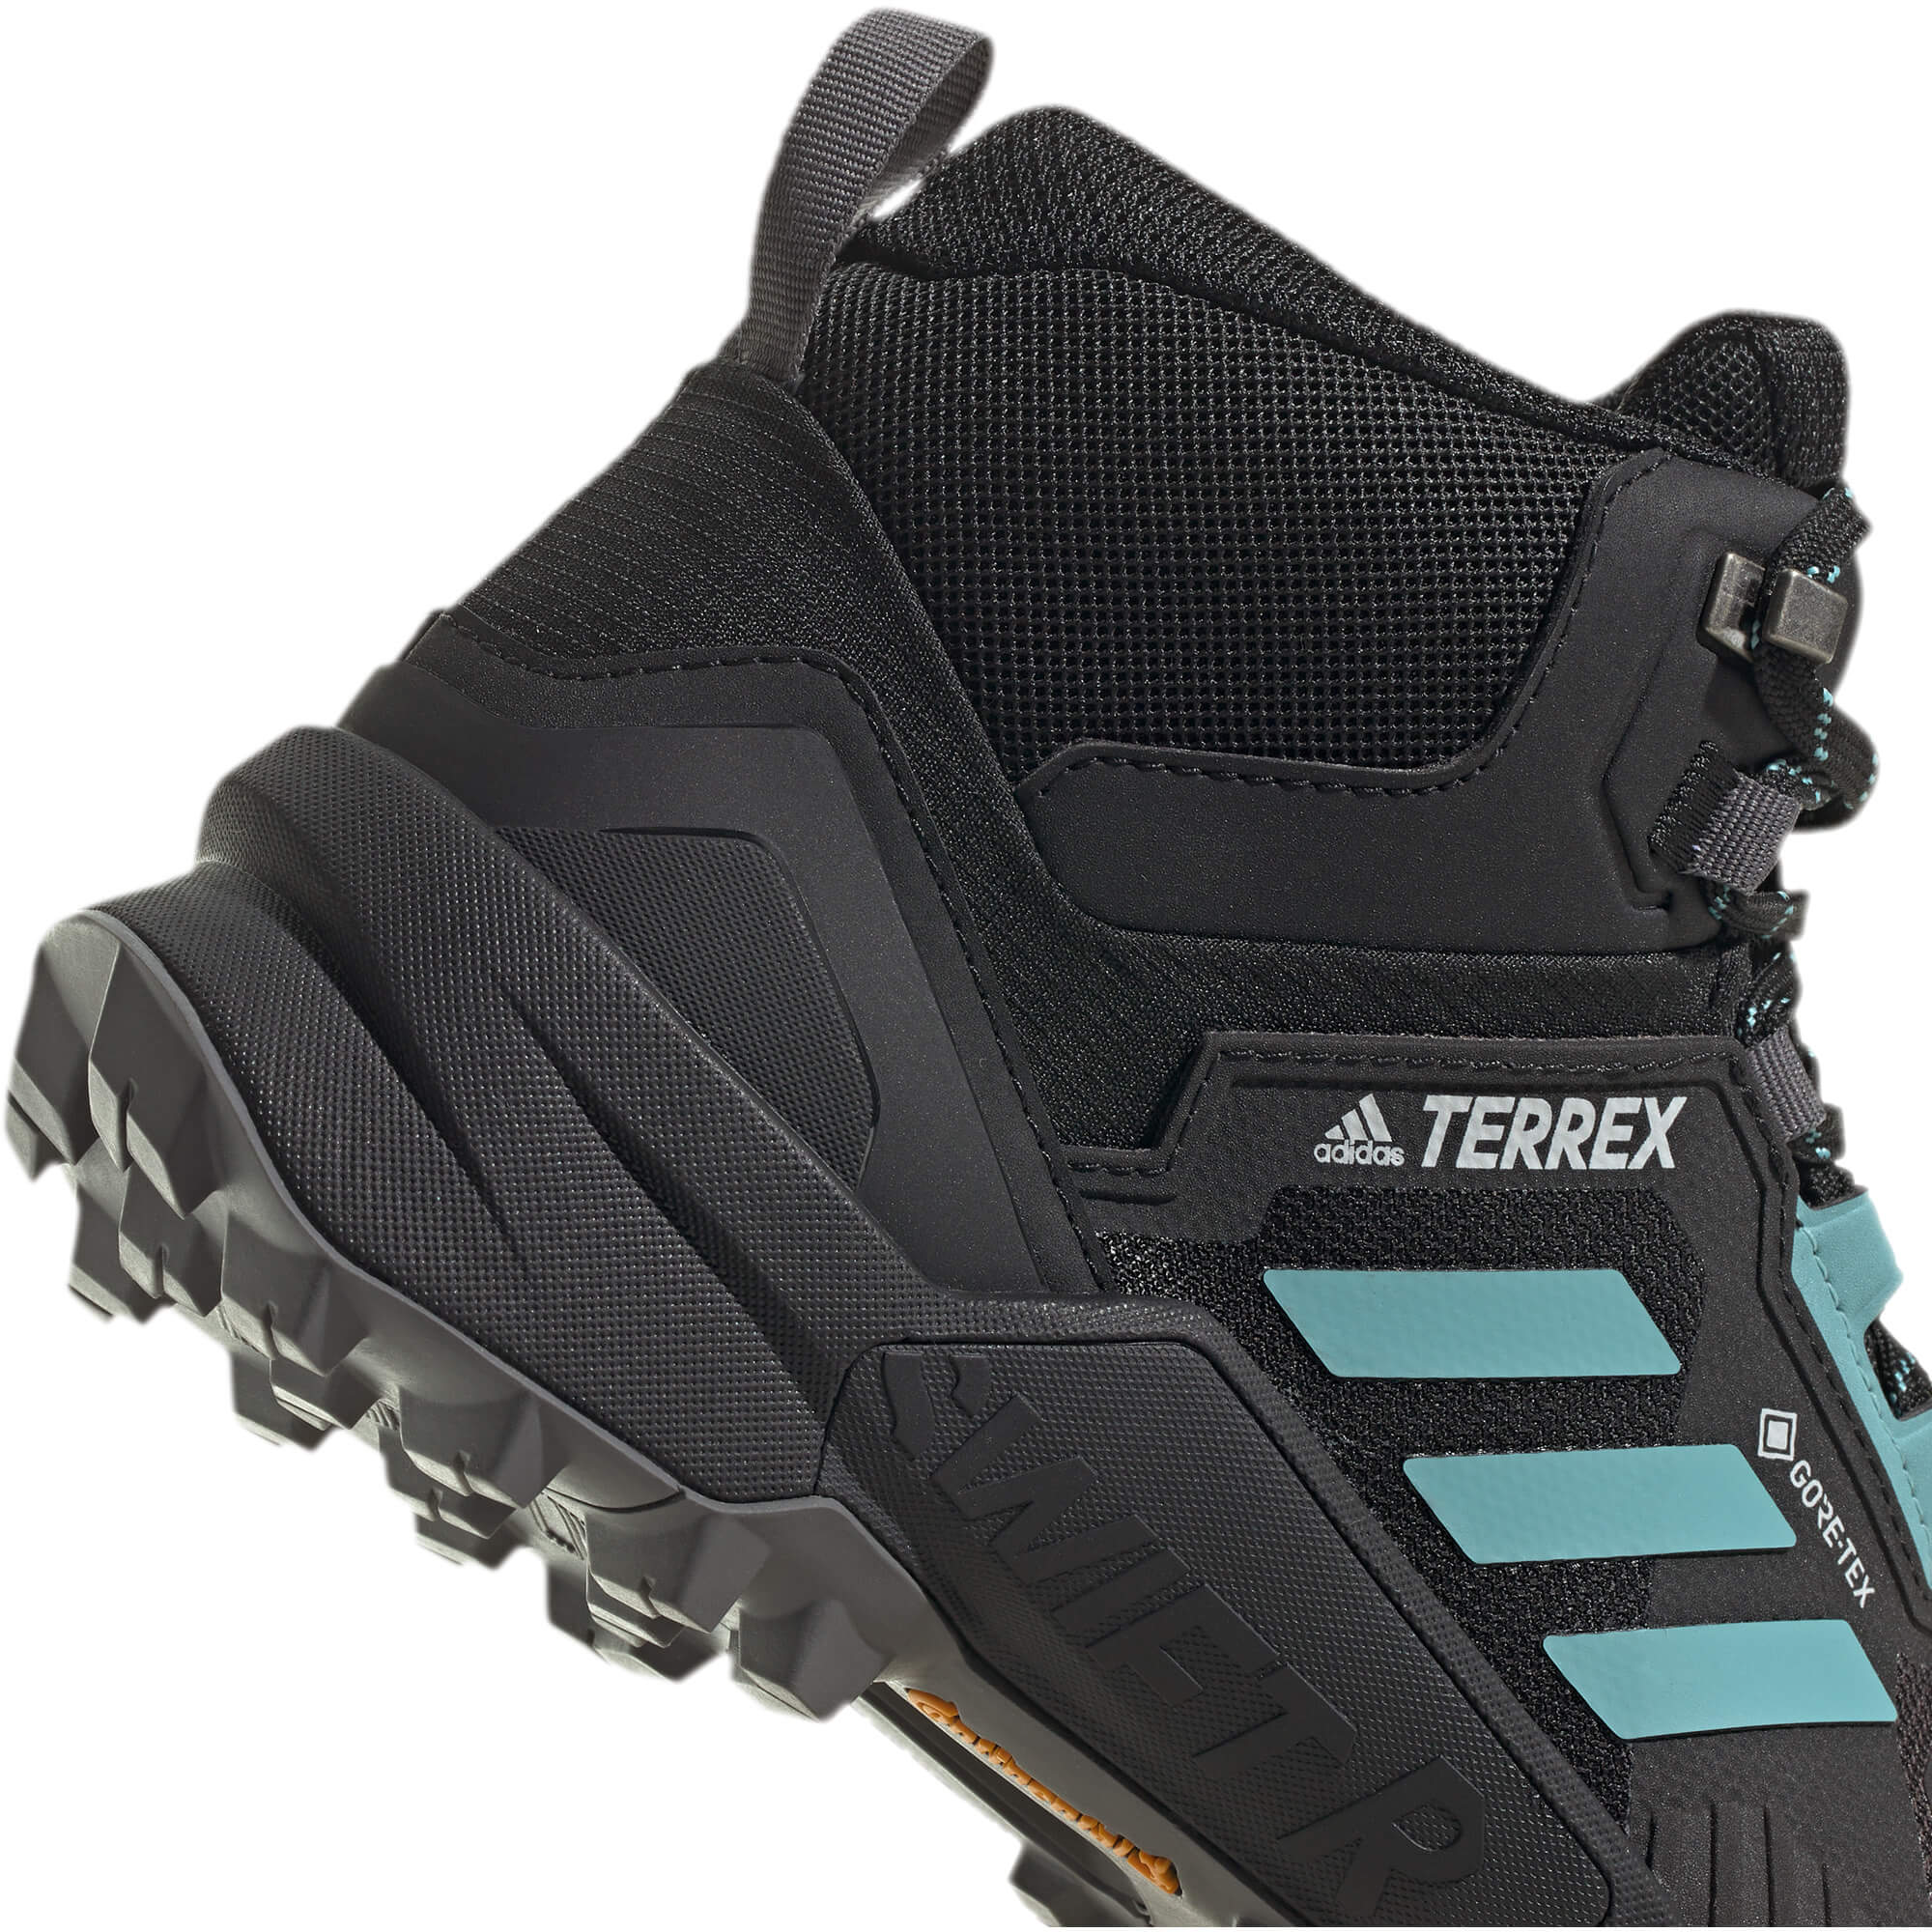 Adidas Terrex Swift R3 Mid GTX Women's Walking Shoes